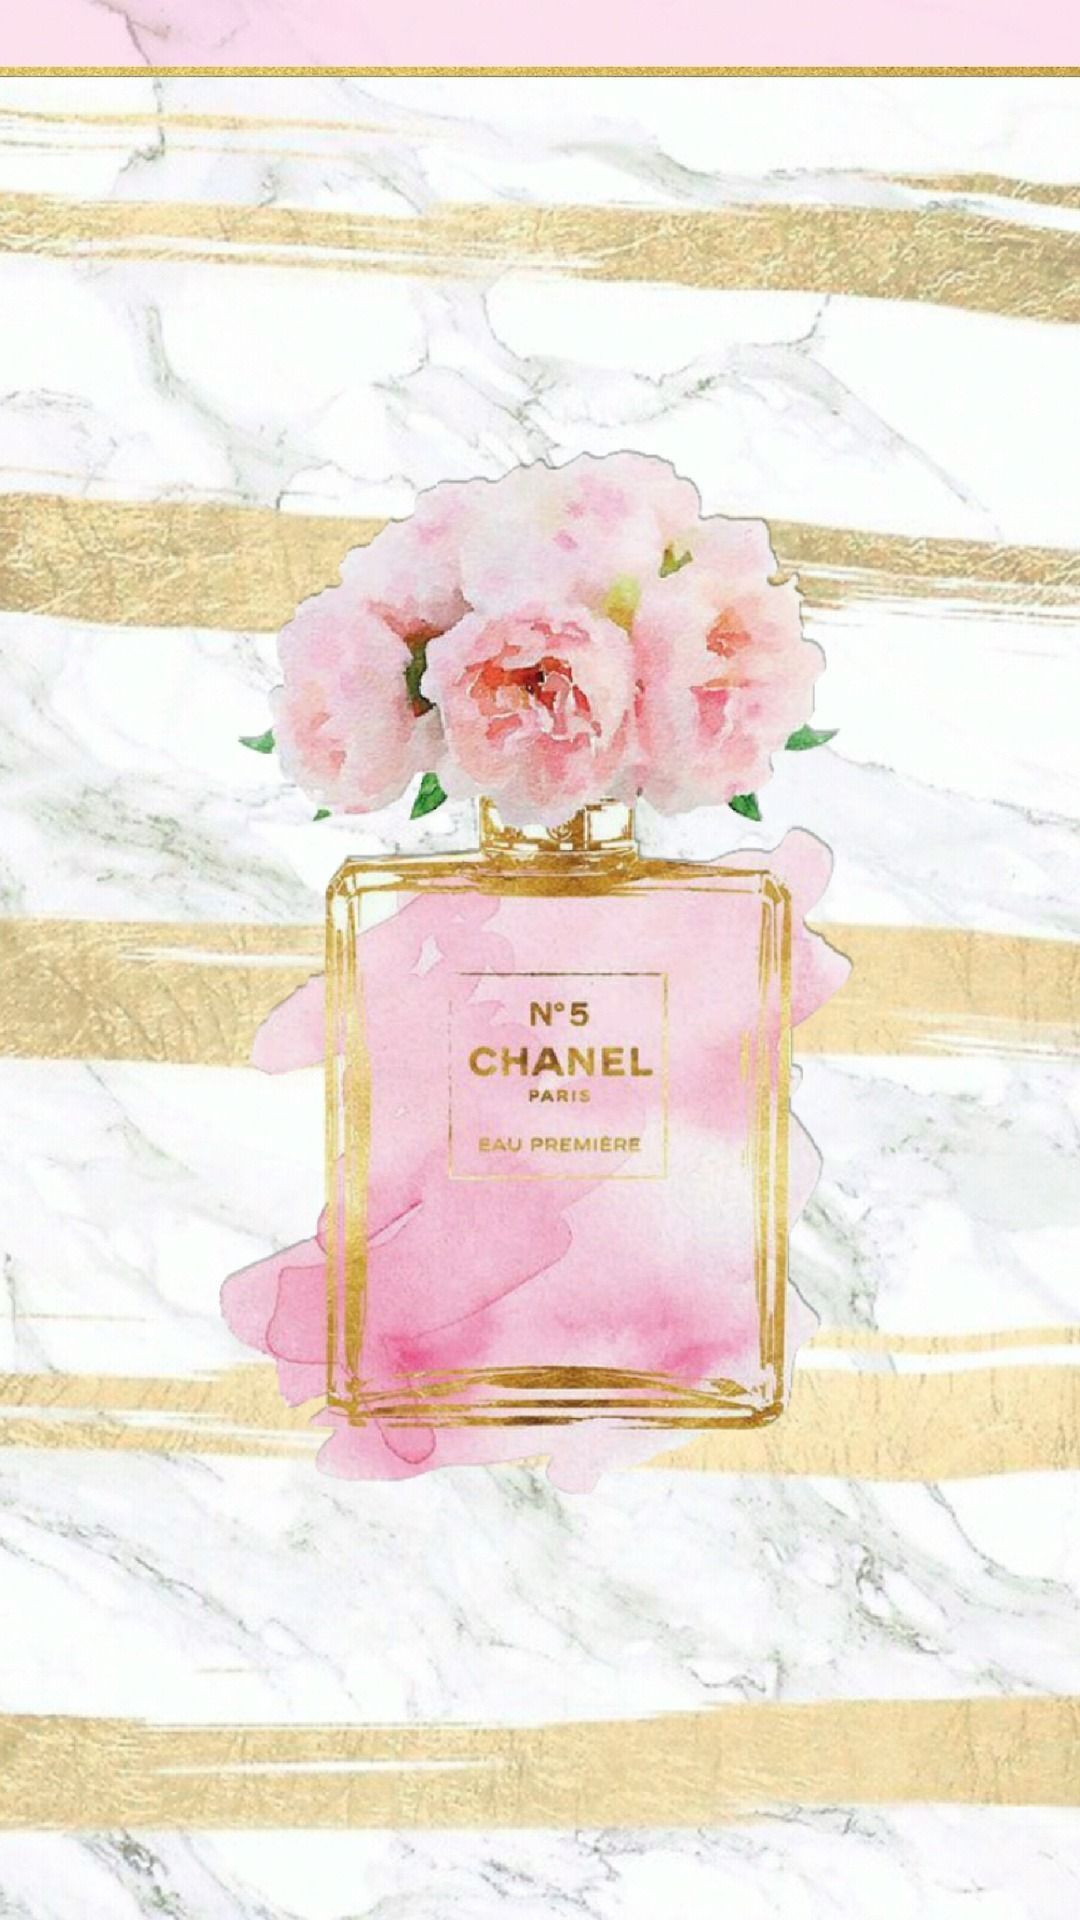 Perfume wallpaper #perfumewallpaper. Chanel wallpaper, Wallpaper, Chanel art